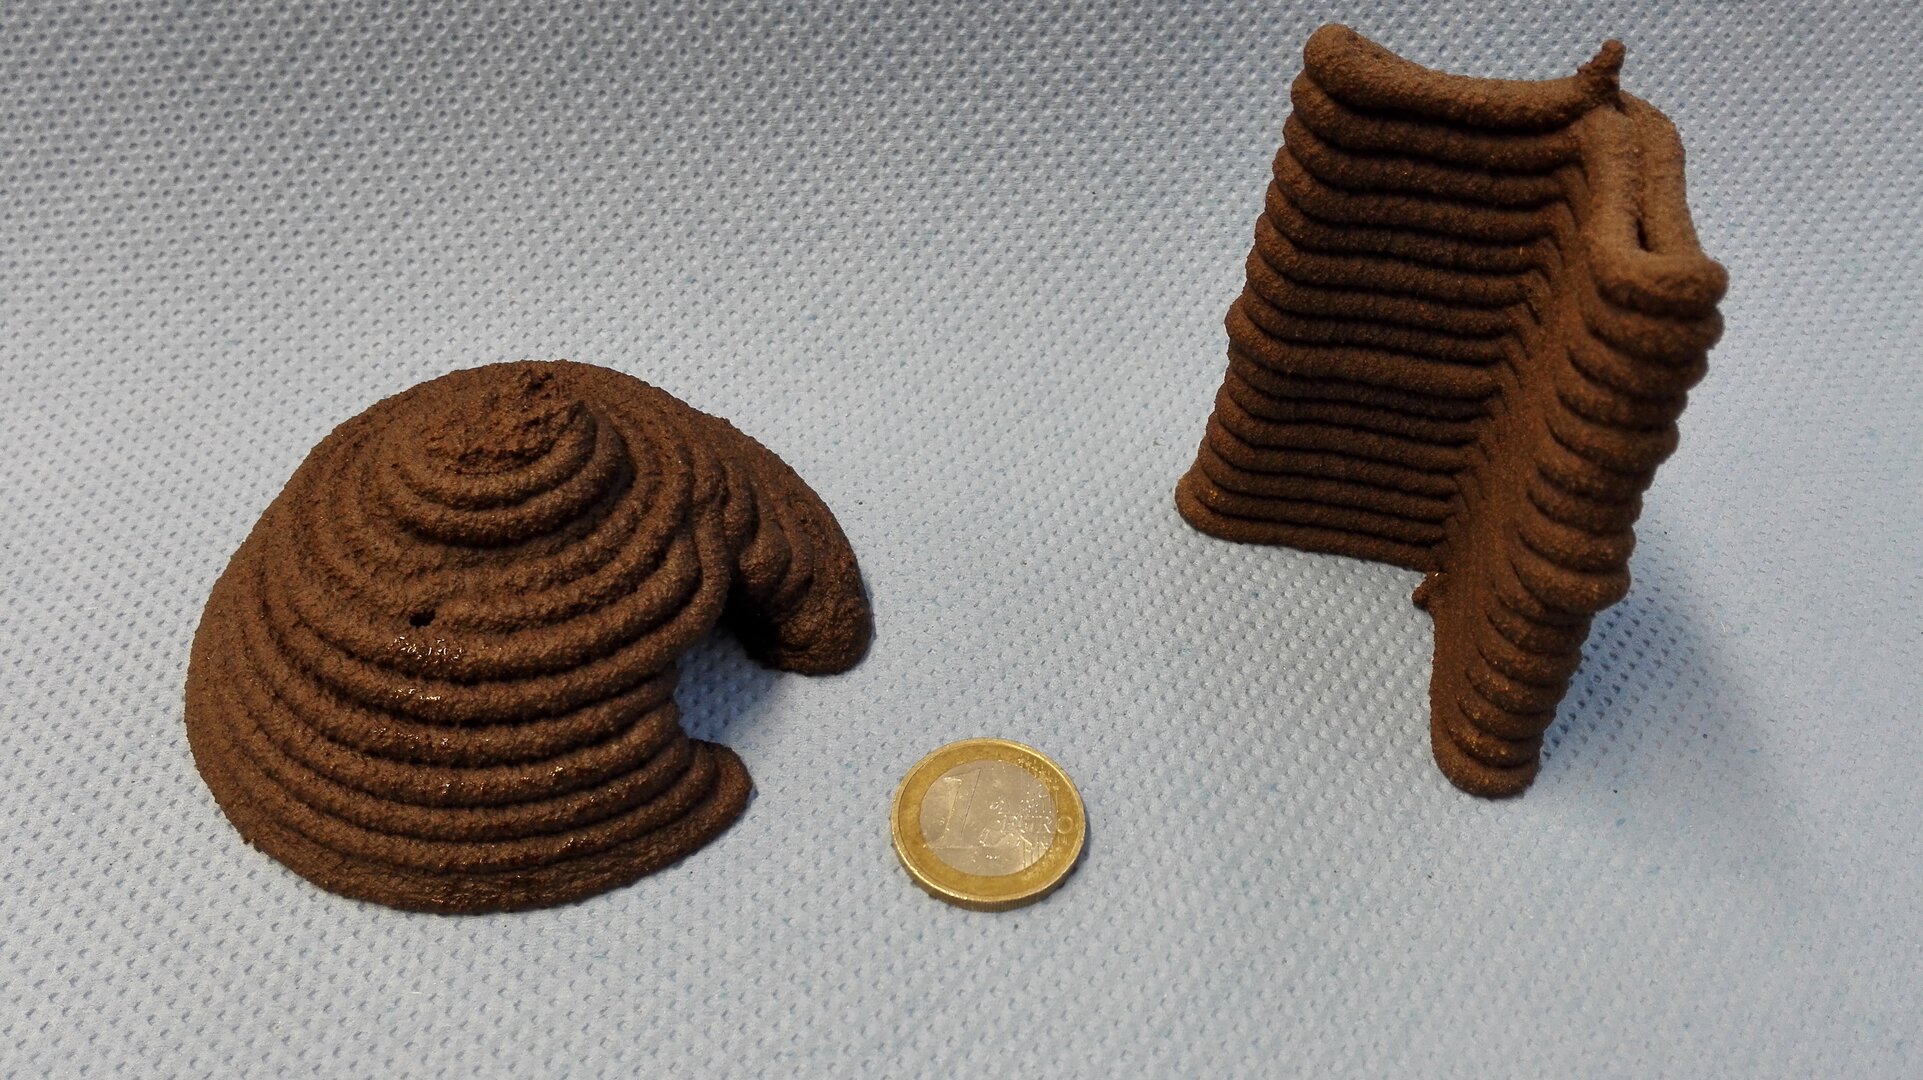 3D printed Mars simulant